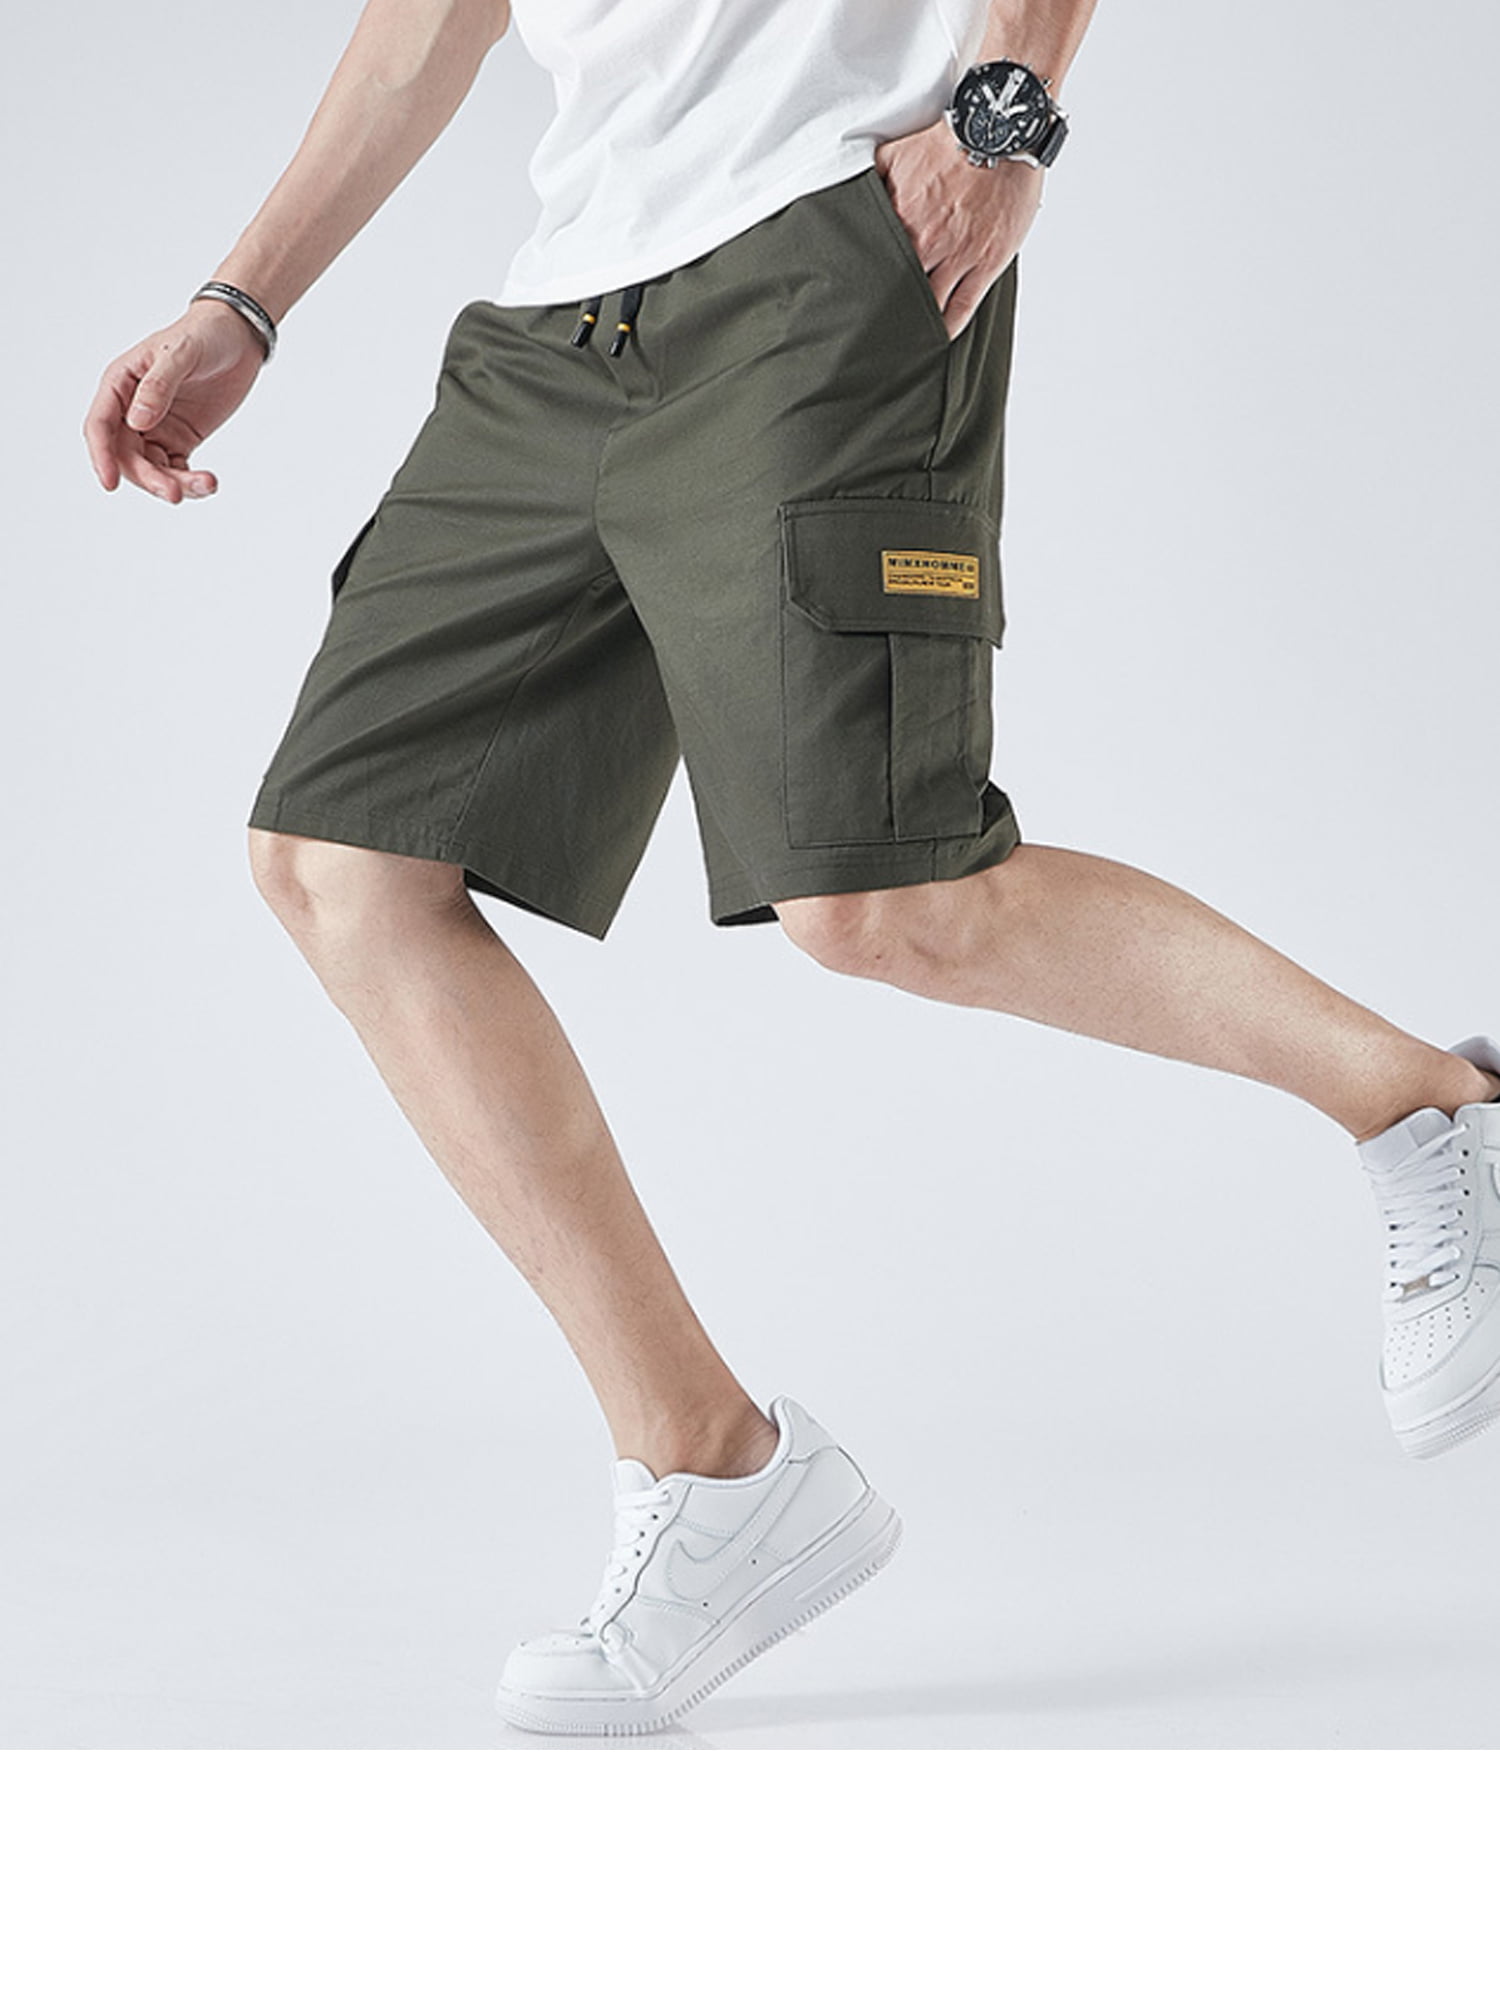 Men's Casual Capri Short Cargo Pants Multi Pocket Army Military Style Trousers